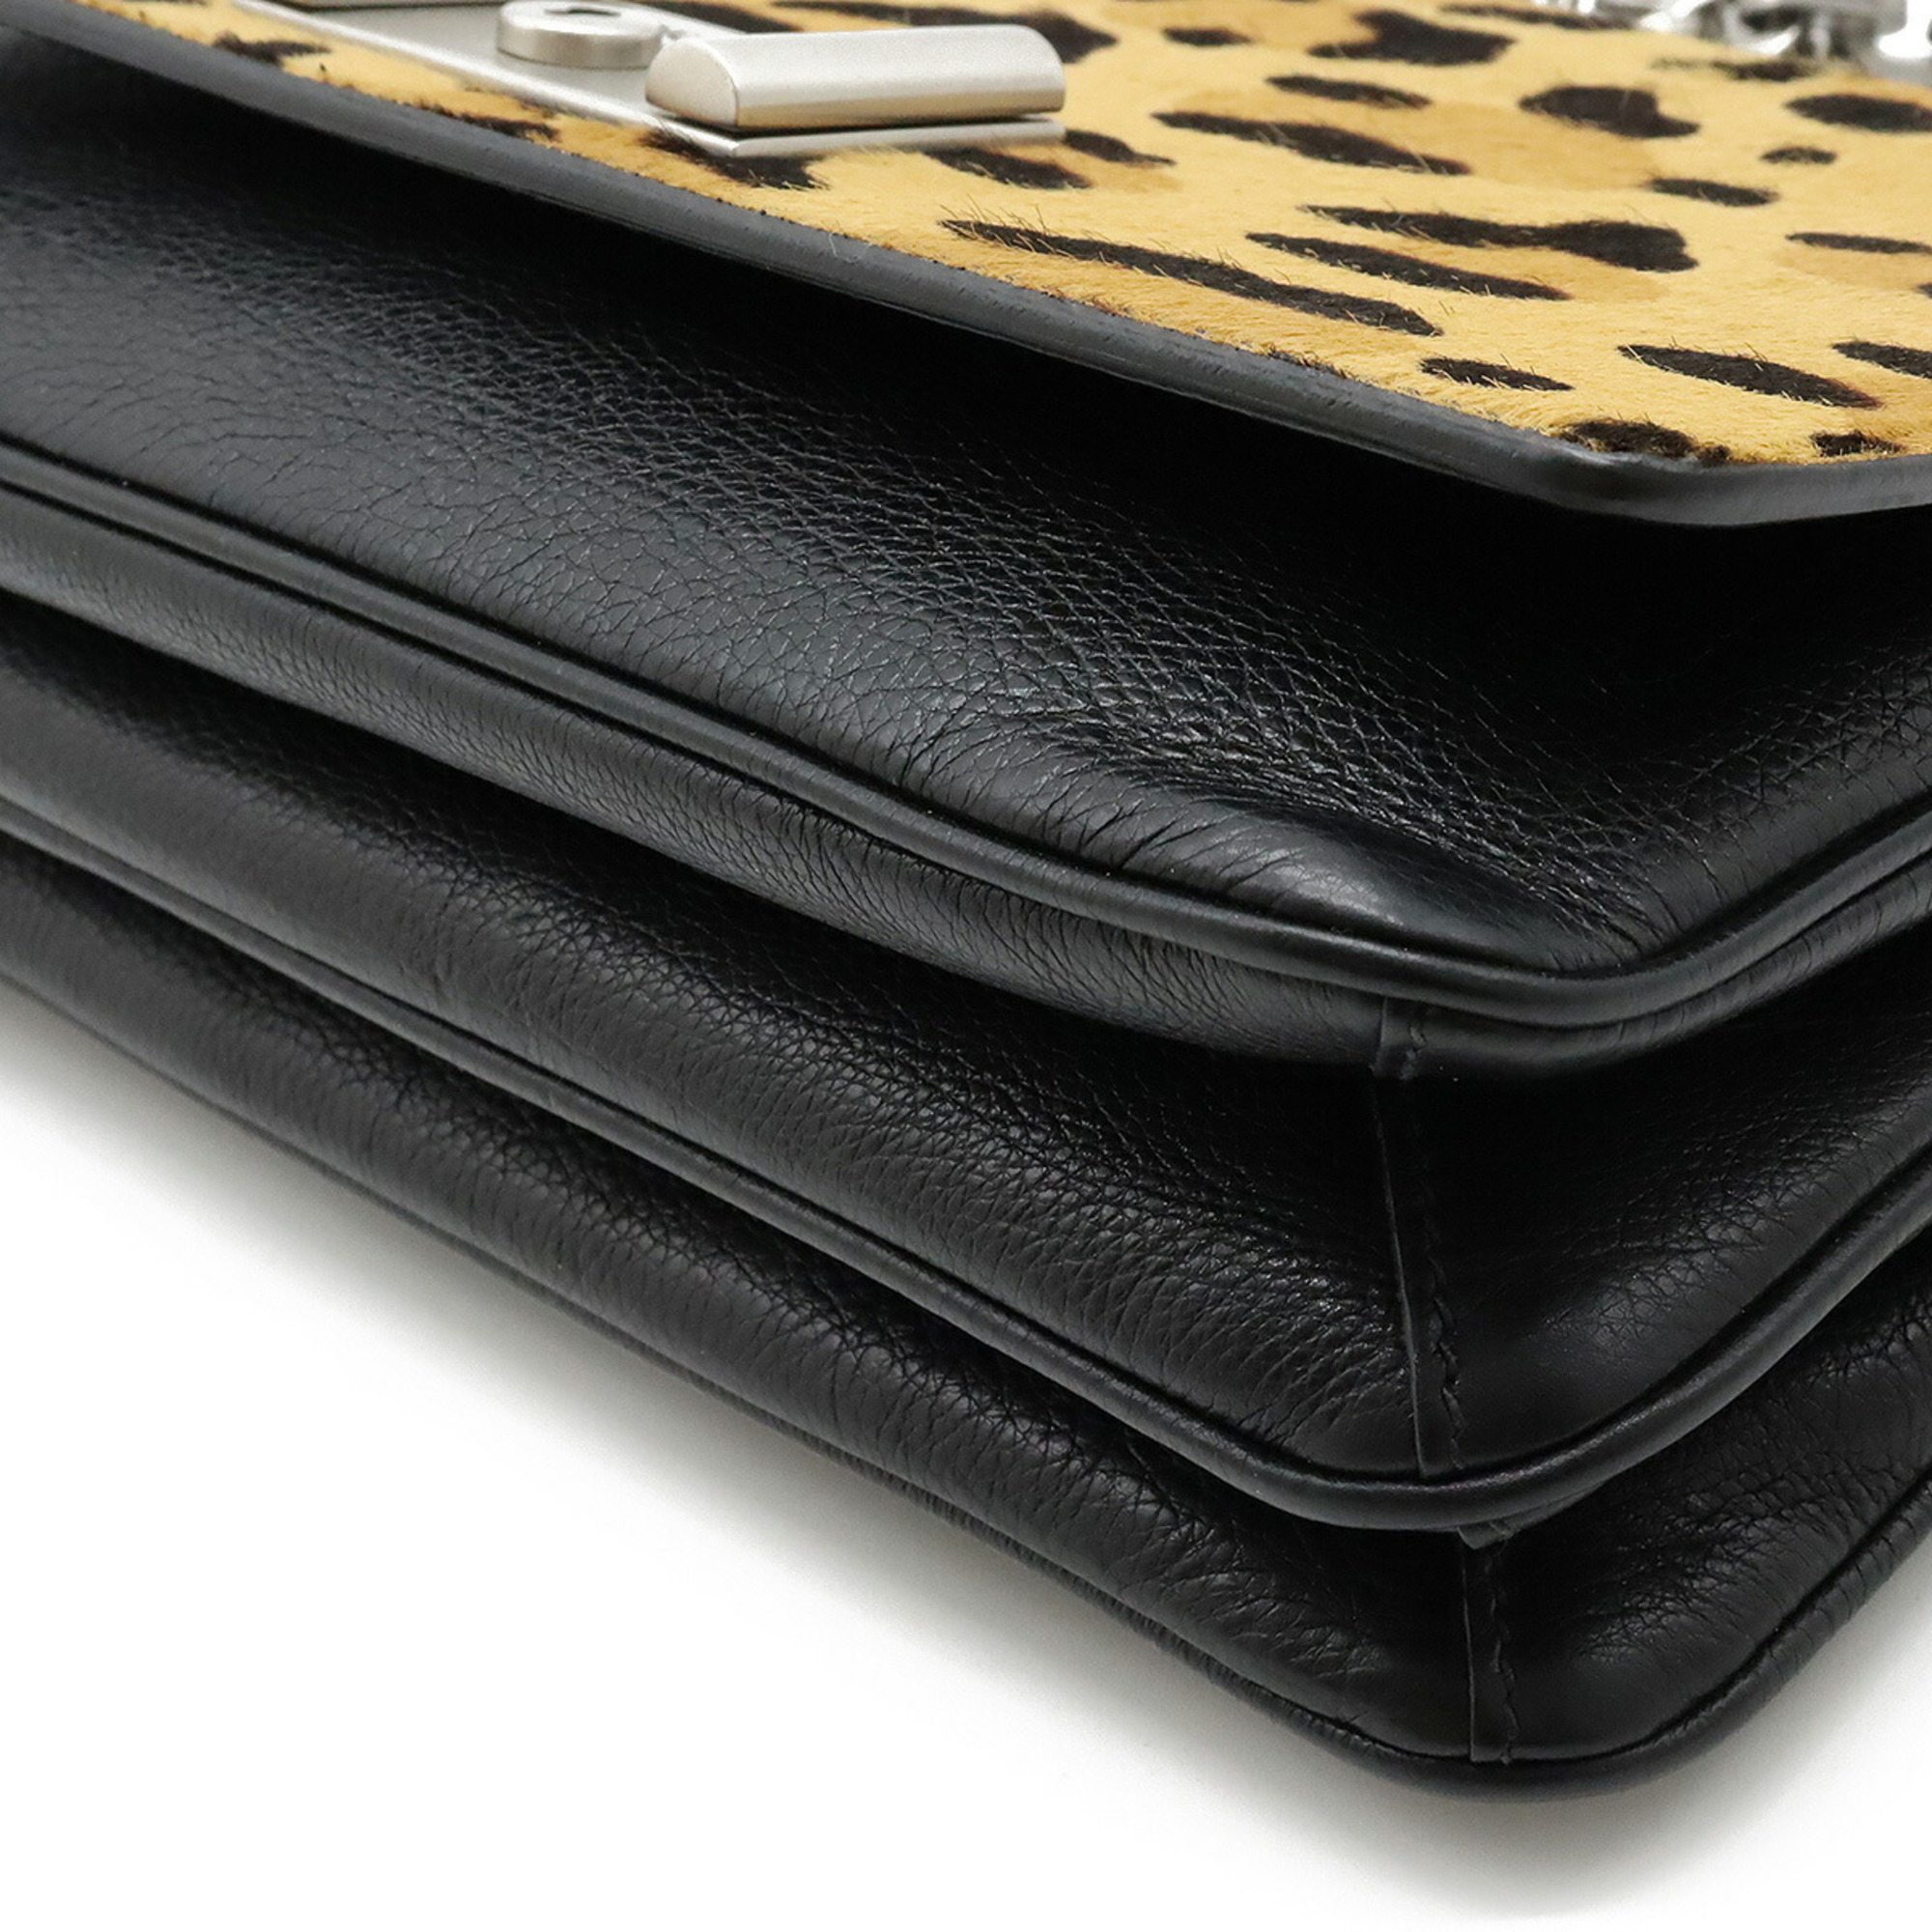 PRADA CAVALLINO GLACE Chain Shoulder Bag Clutch Haraco Leopard Leather Beige Black Overseas Duty Free Shop Purchased Item 1BD009